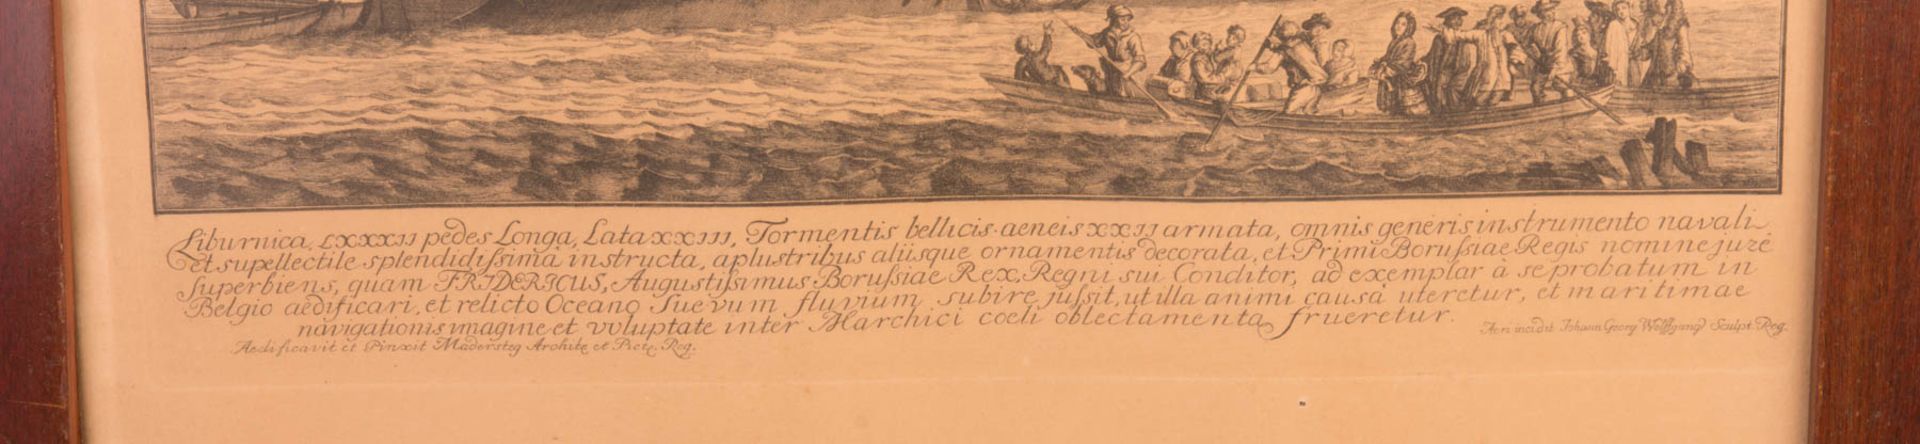 Johann Georg Wolffgang, 'Liburnica', Lithografie, 1704. - Bild 2 aus 9